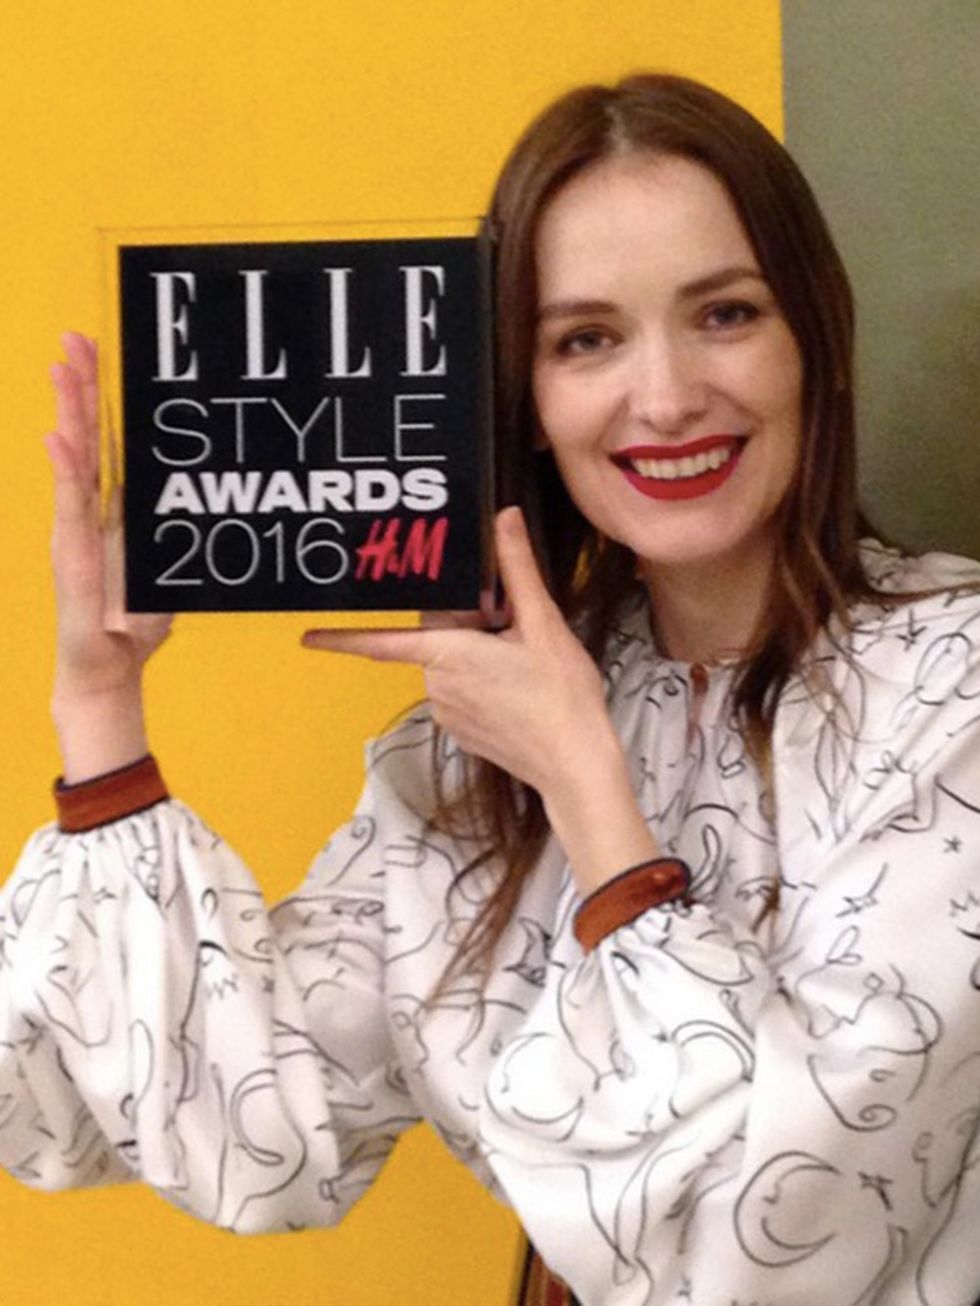 'THANK YOU @elleuk#ElleStyleAwards for this wonderful honour#DesignerOfTheYear !'